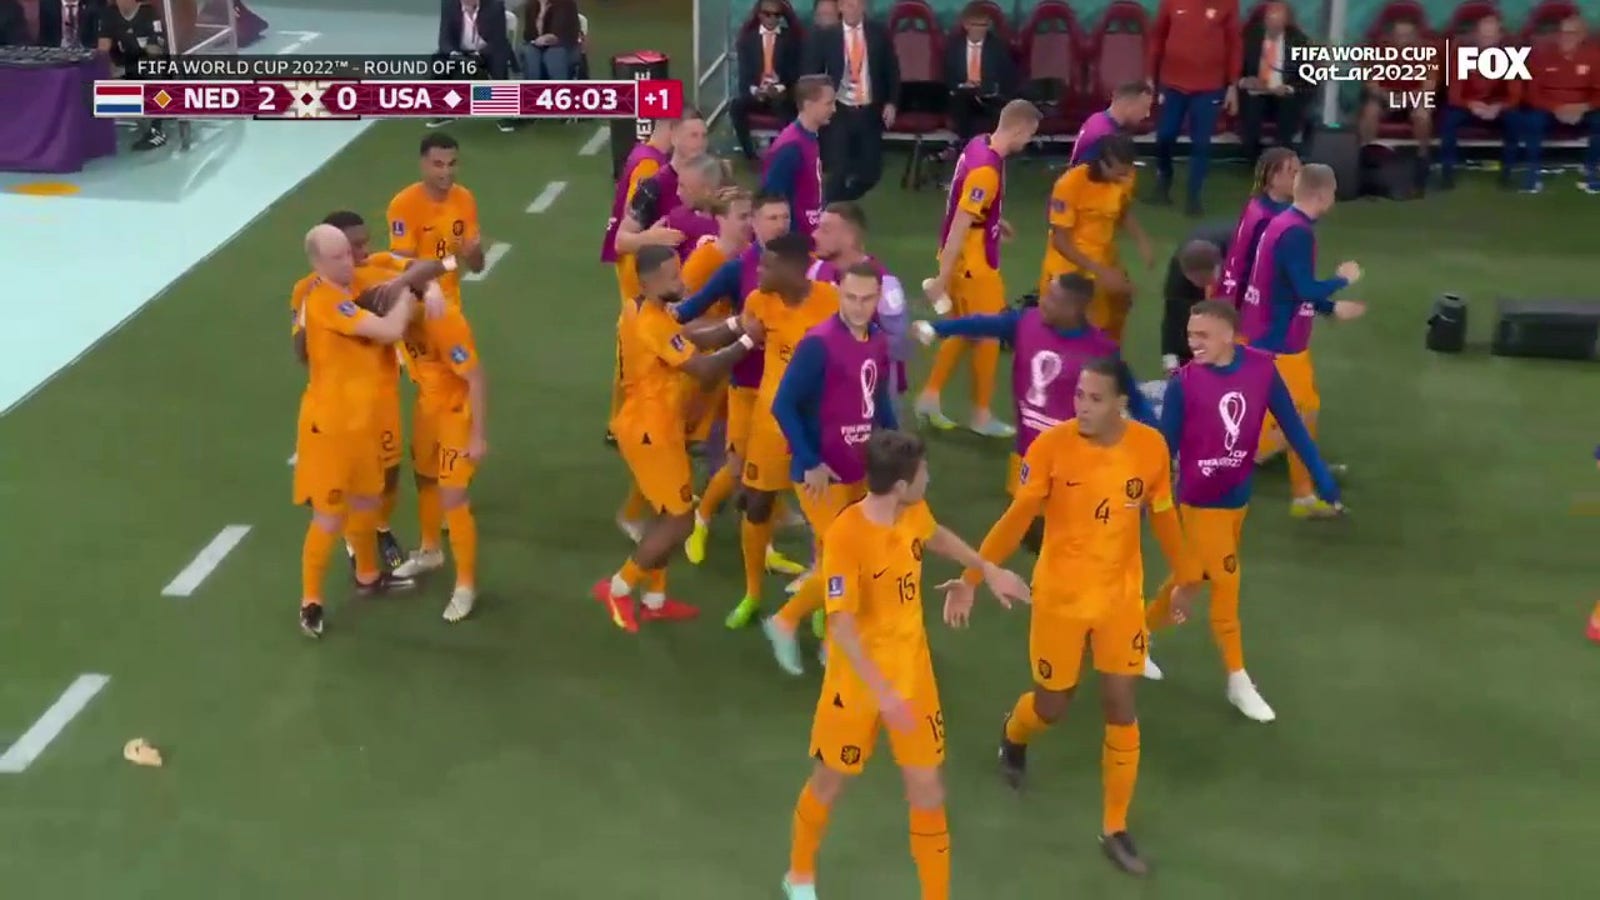 Netherlands's Daley Blind scores goal vs. USA in 45+1'